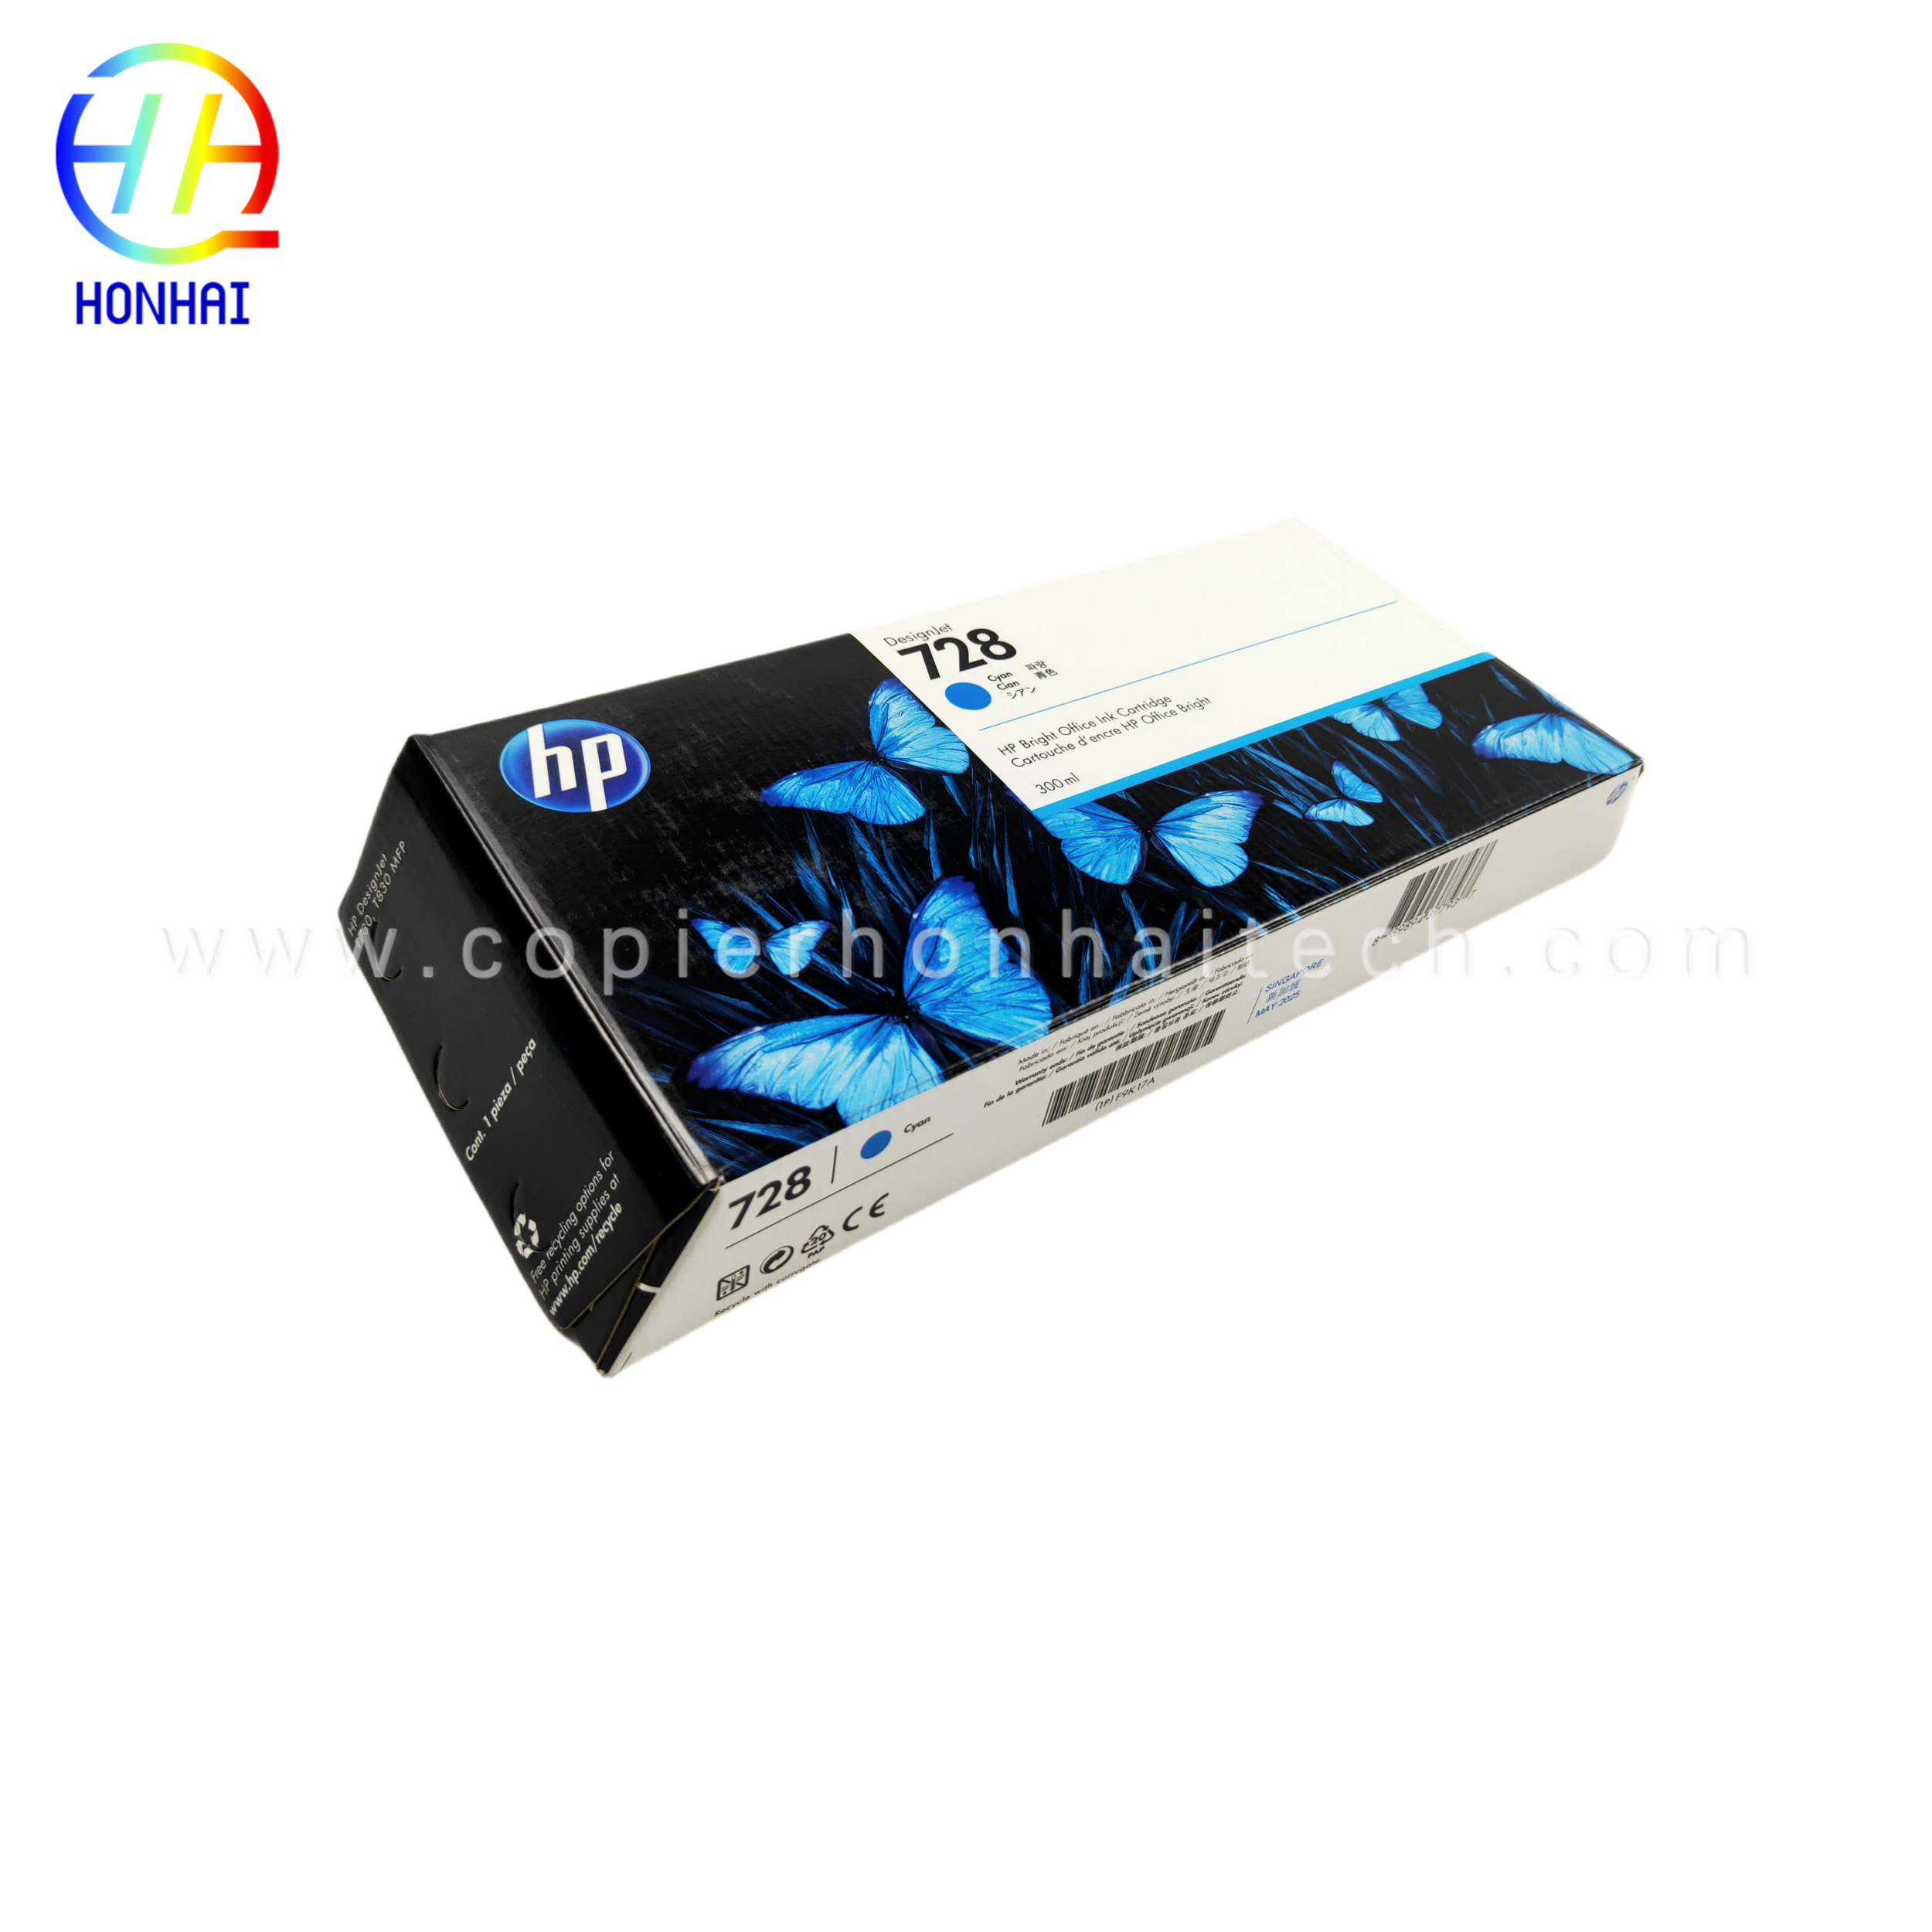 https://www.copierhonhaitech.com/original-new-ink-cartridge-cyan-for-hp-designjet-t730-and-t830-large-format-plotter-printers-and-hp-729-designjet-printhead- 728-f9k17a-product/